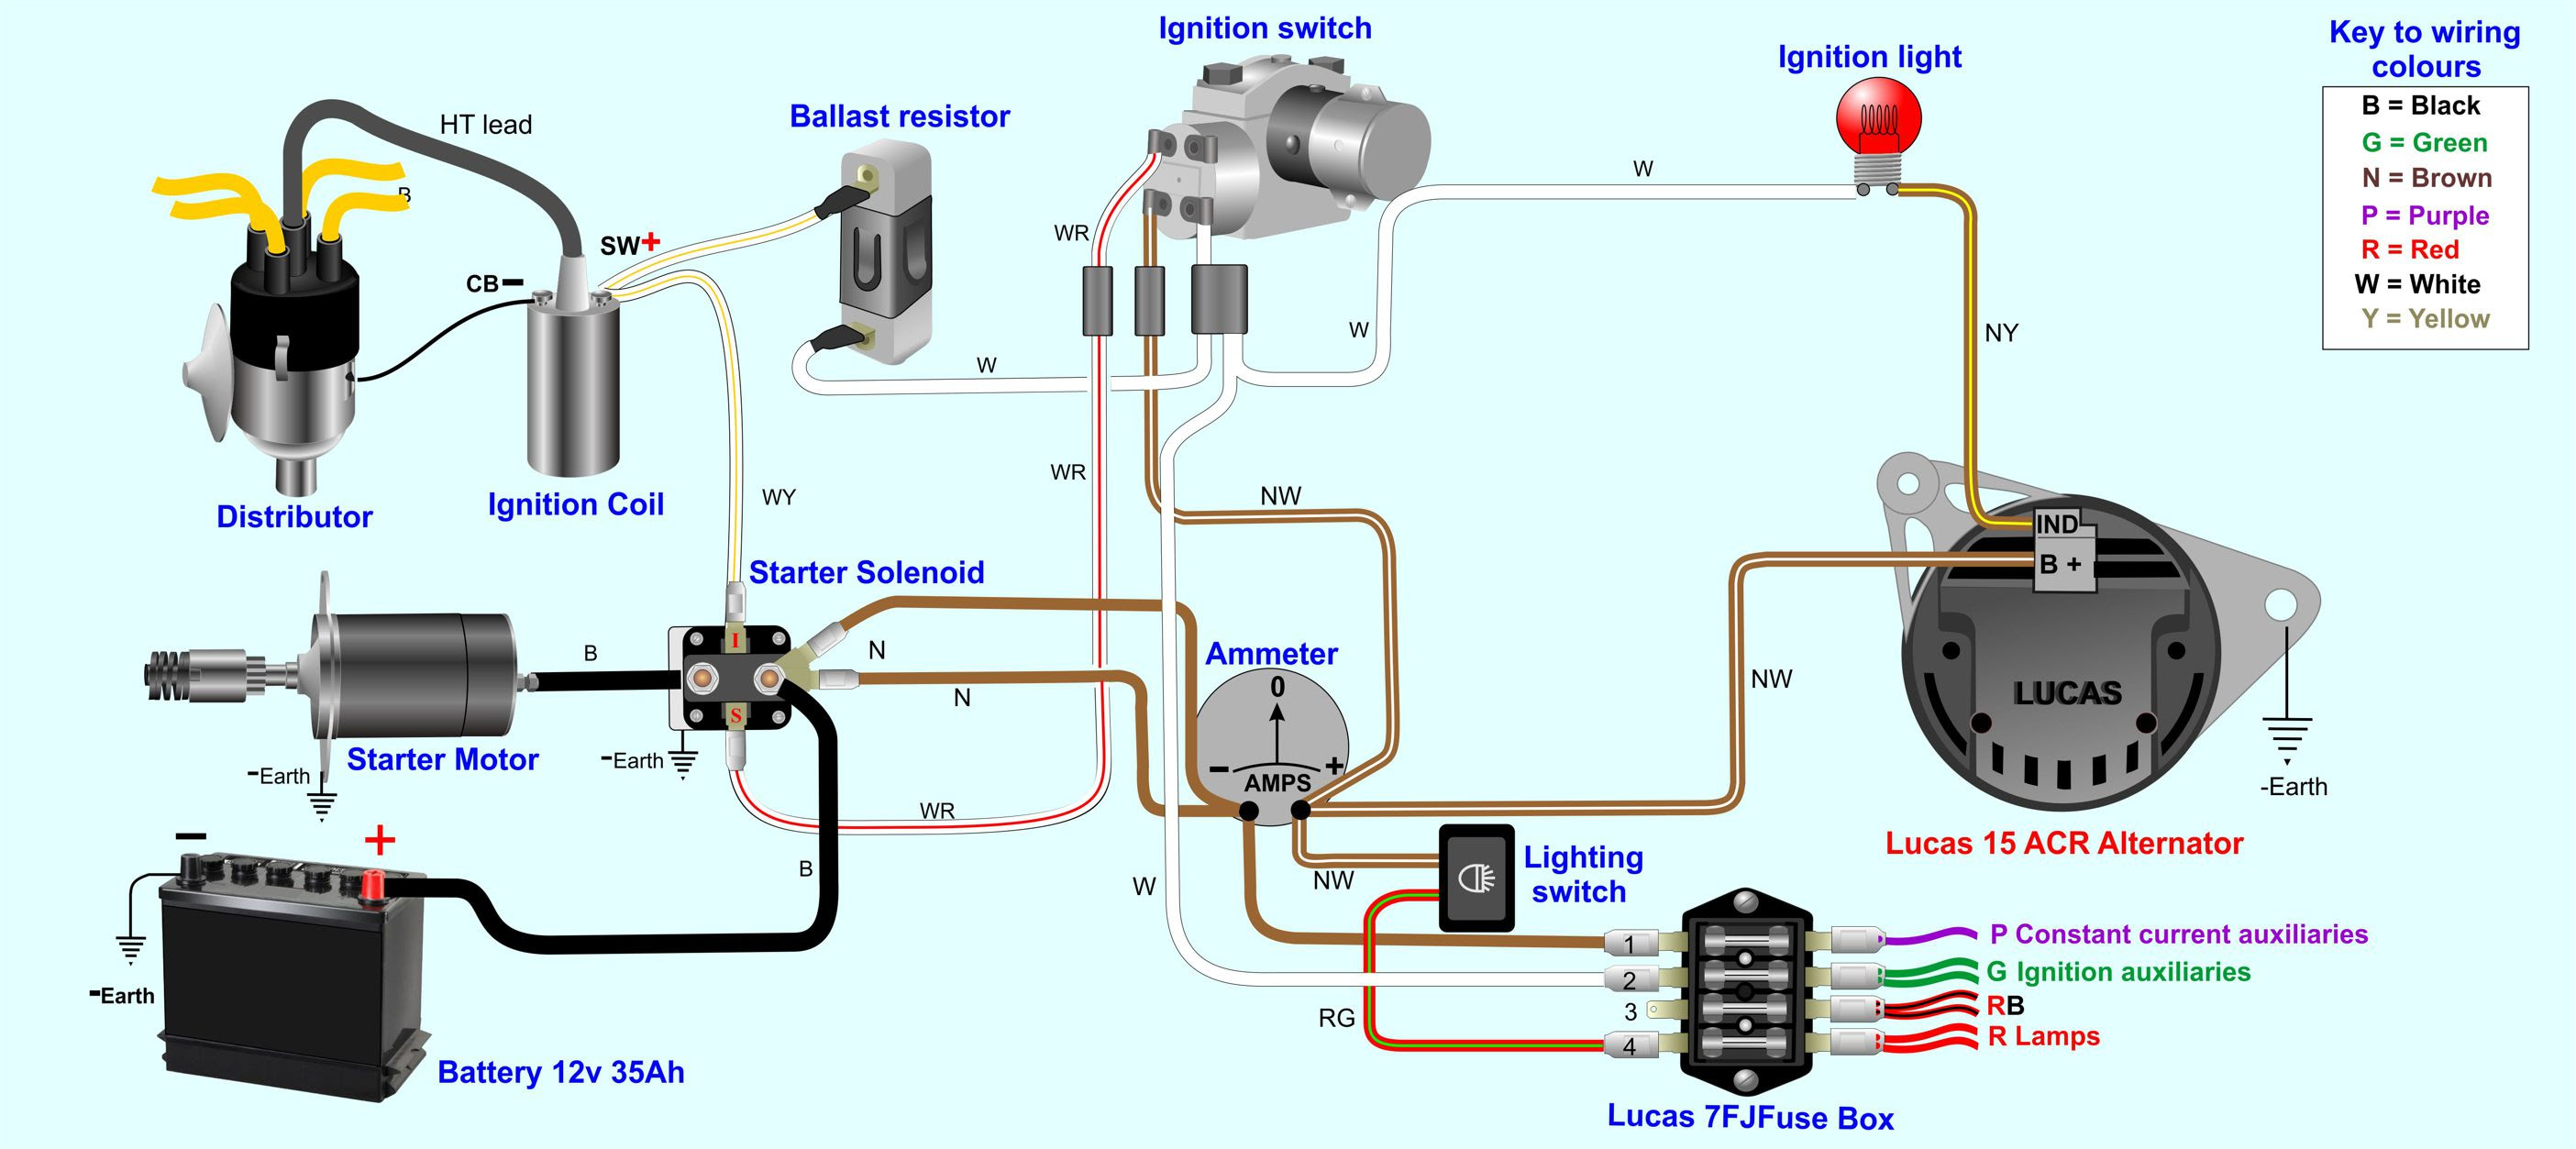 Wiring Diagram Gallery: Wiring Diagram Alternator To Battery